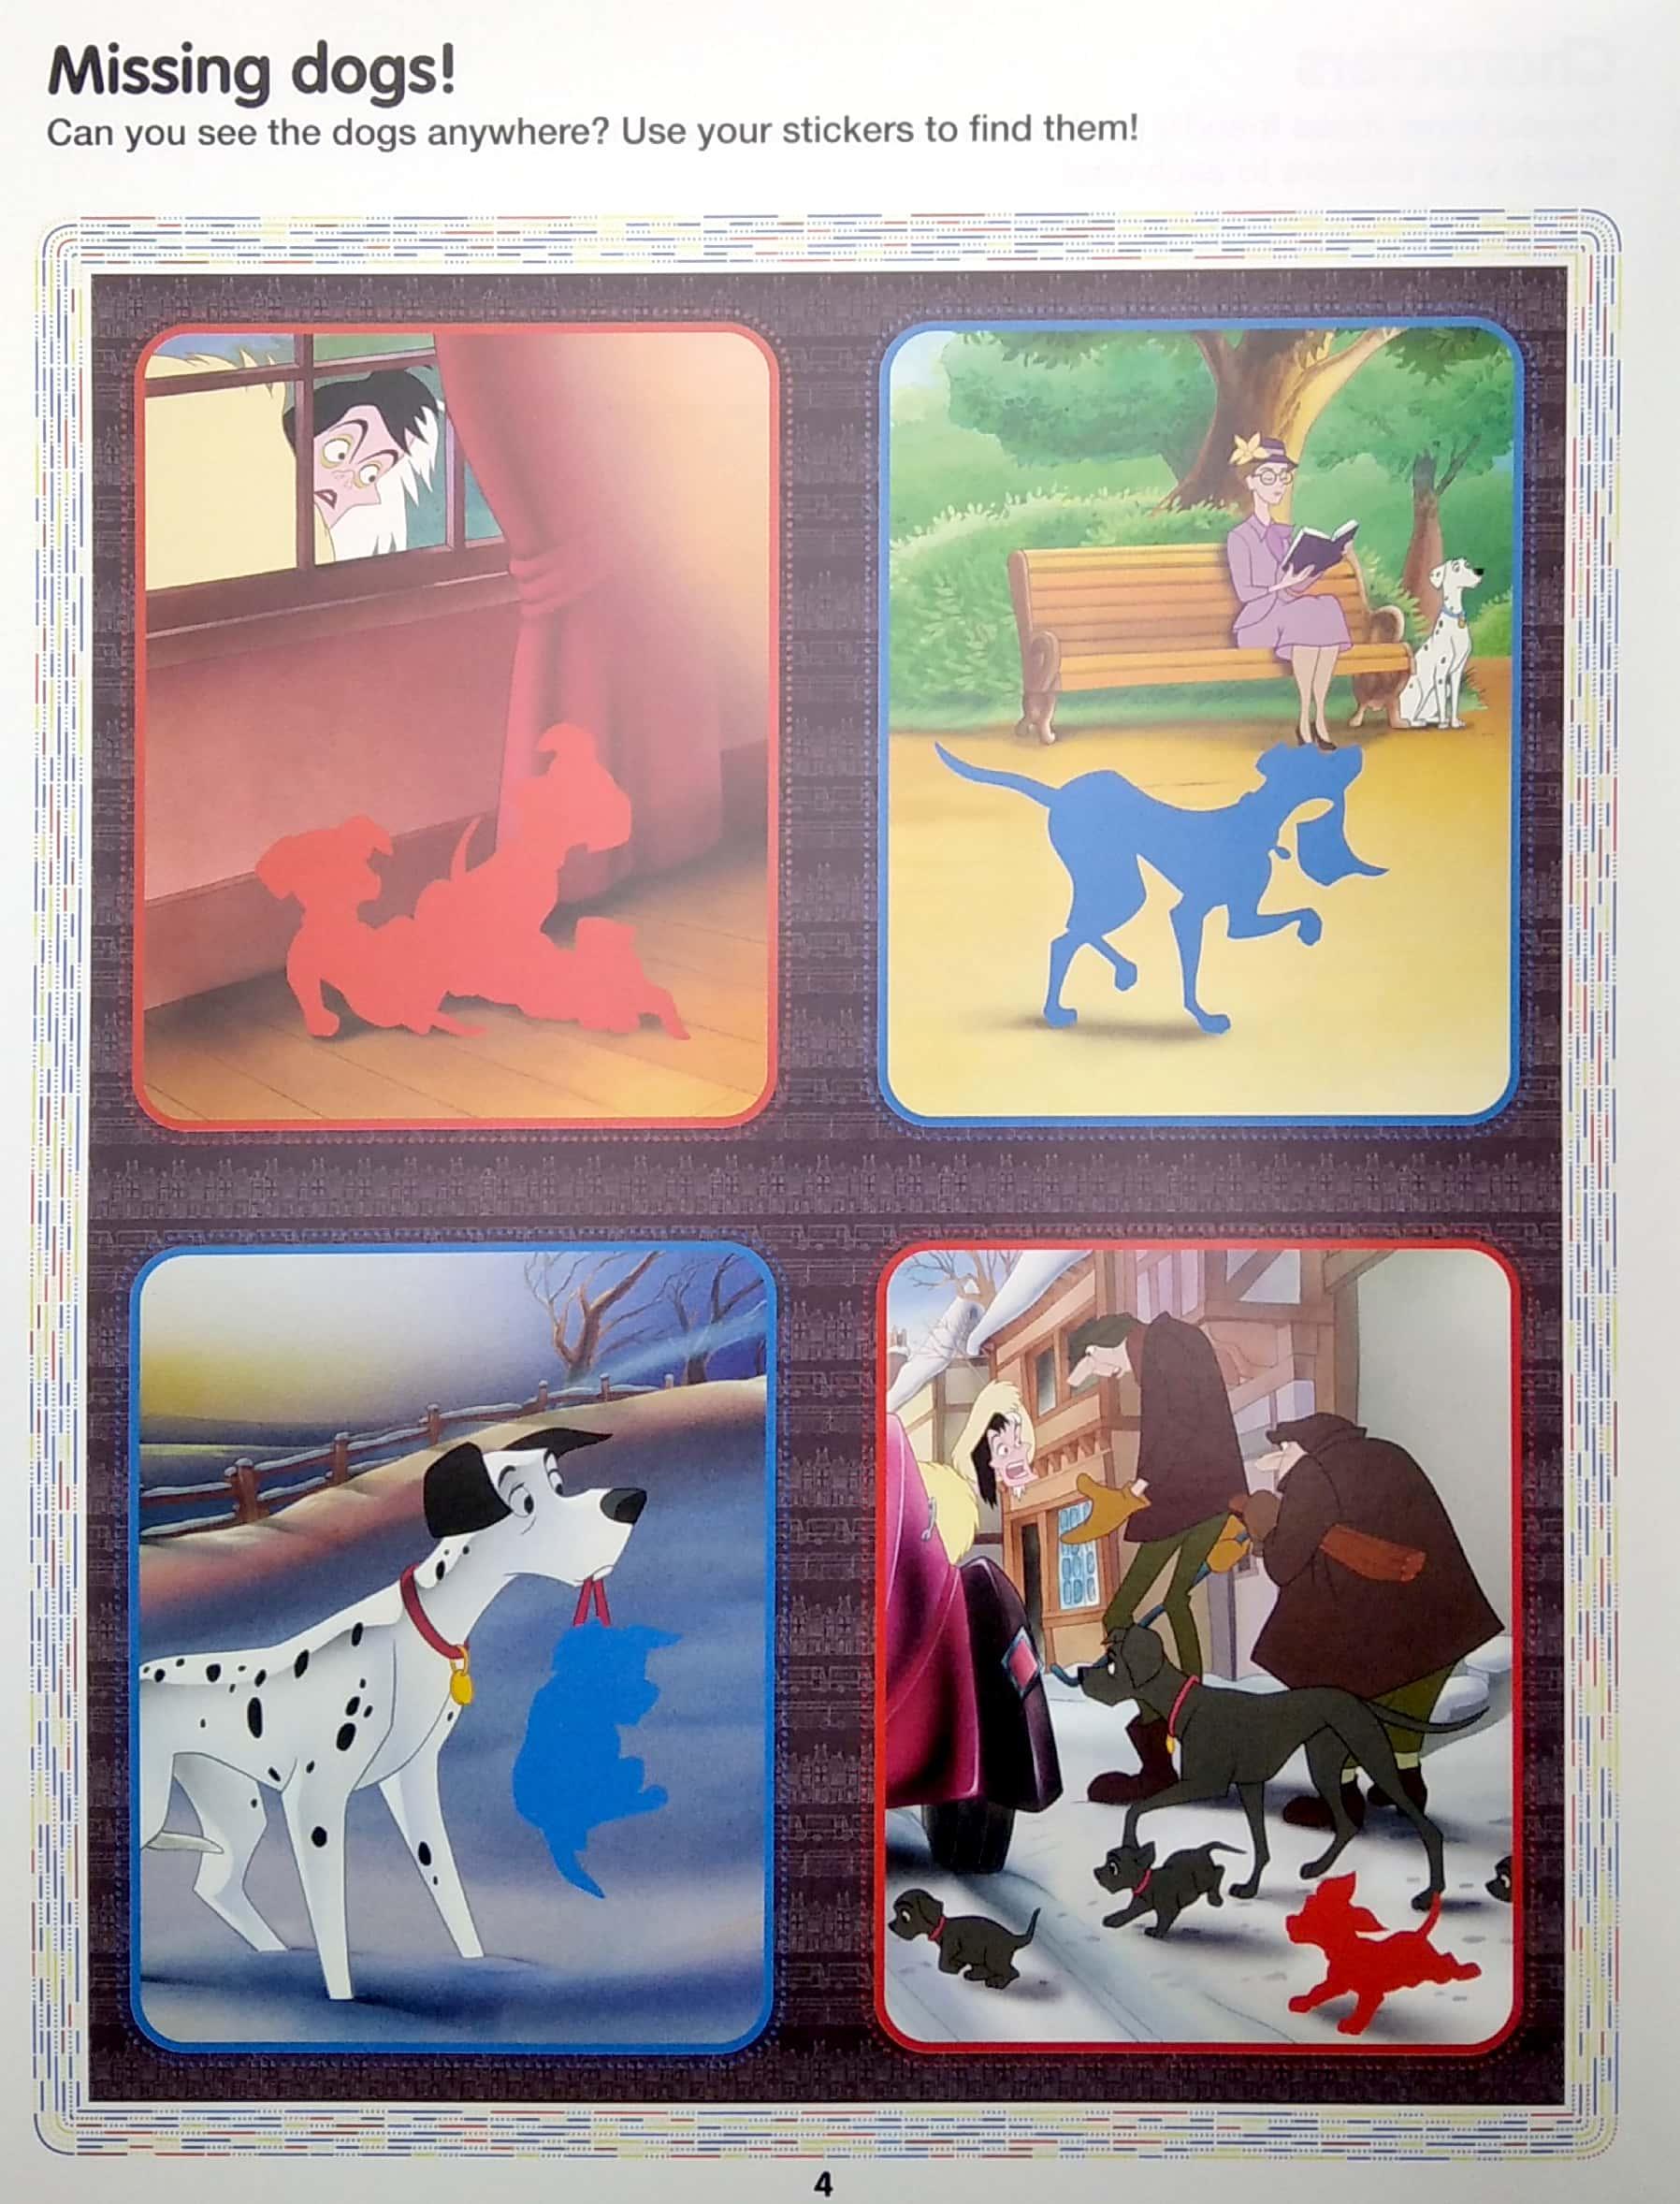 Disney Animals Classics Sticker Book Treasury